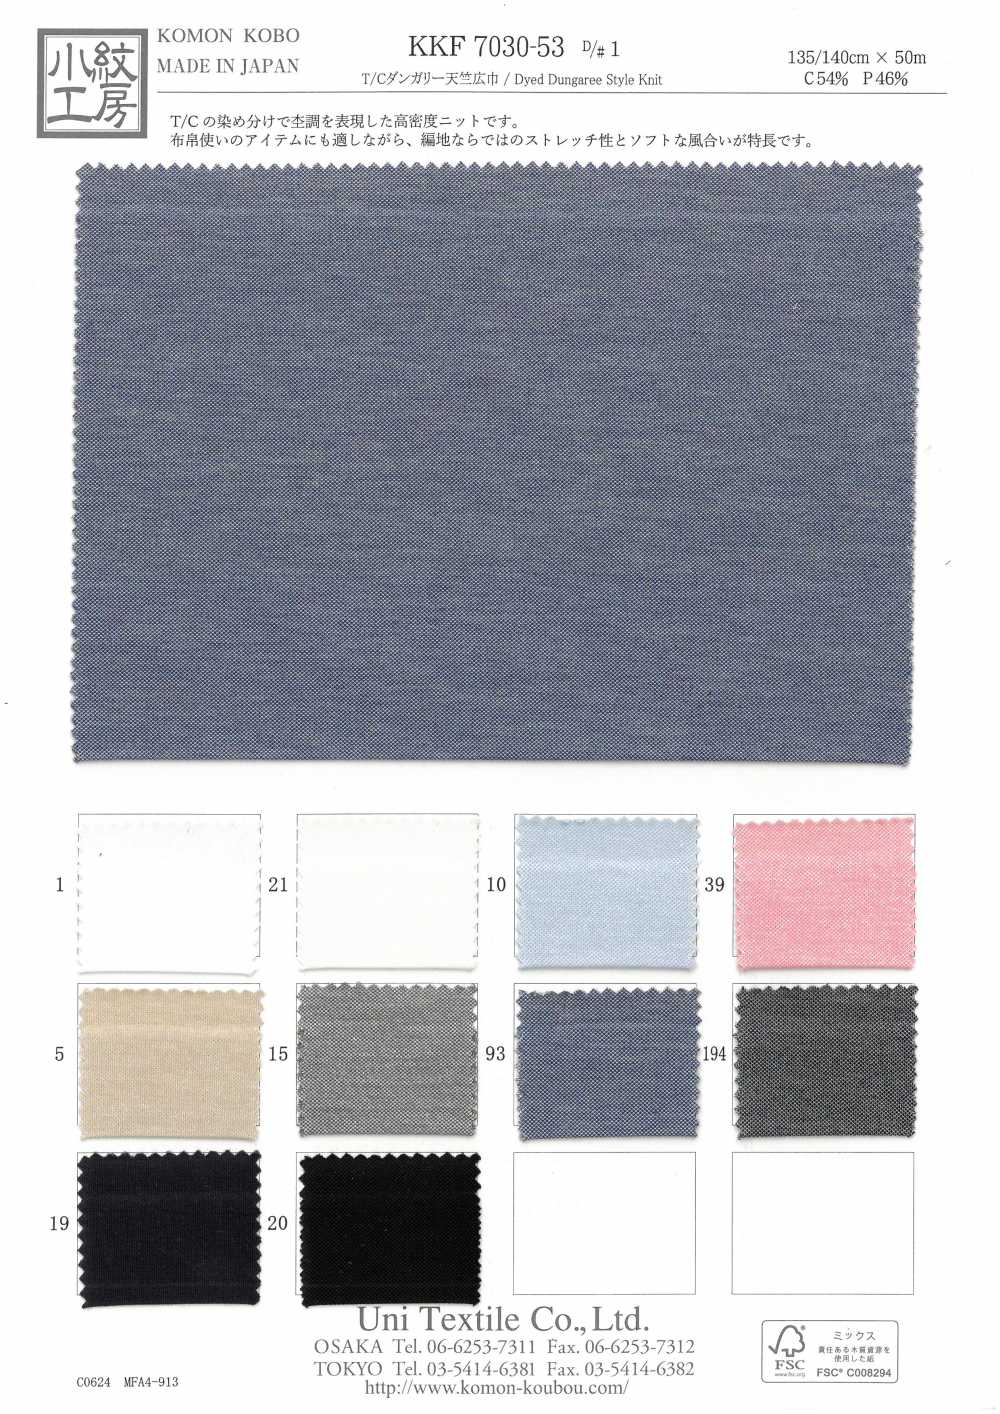 KKF7030-53 T / C Vải Thô Dungaree Vải Cotton Tenjiku Khổ Rộng Uni Textile